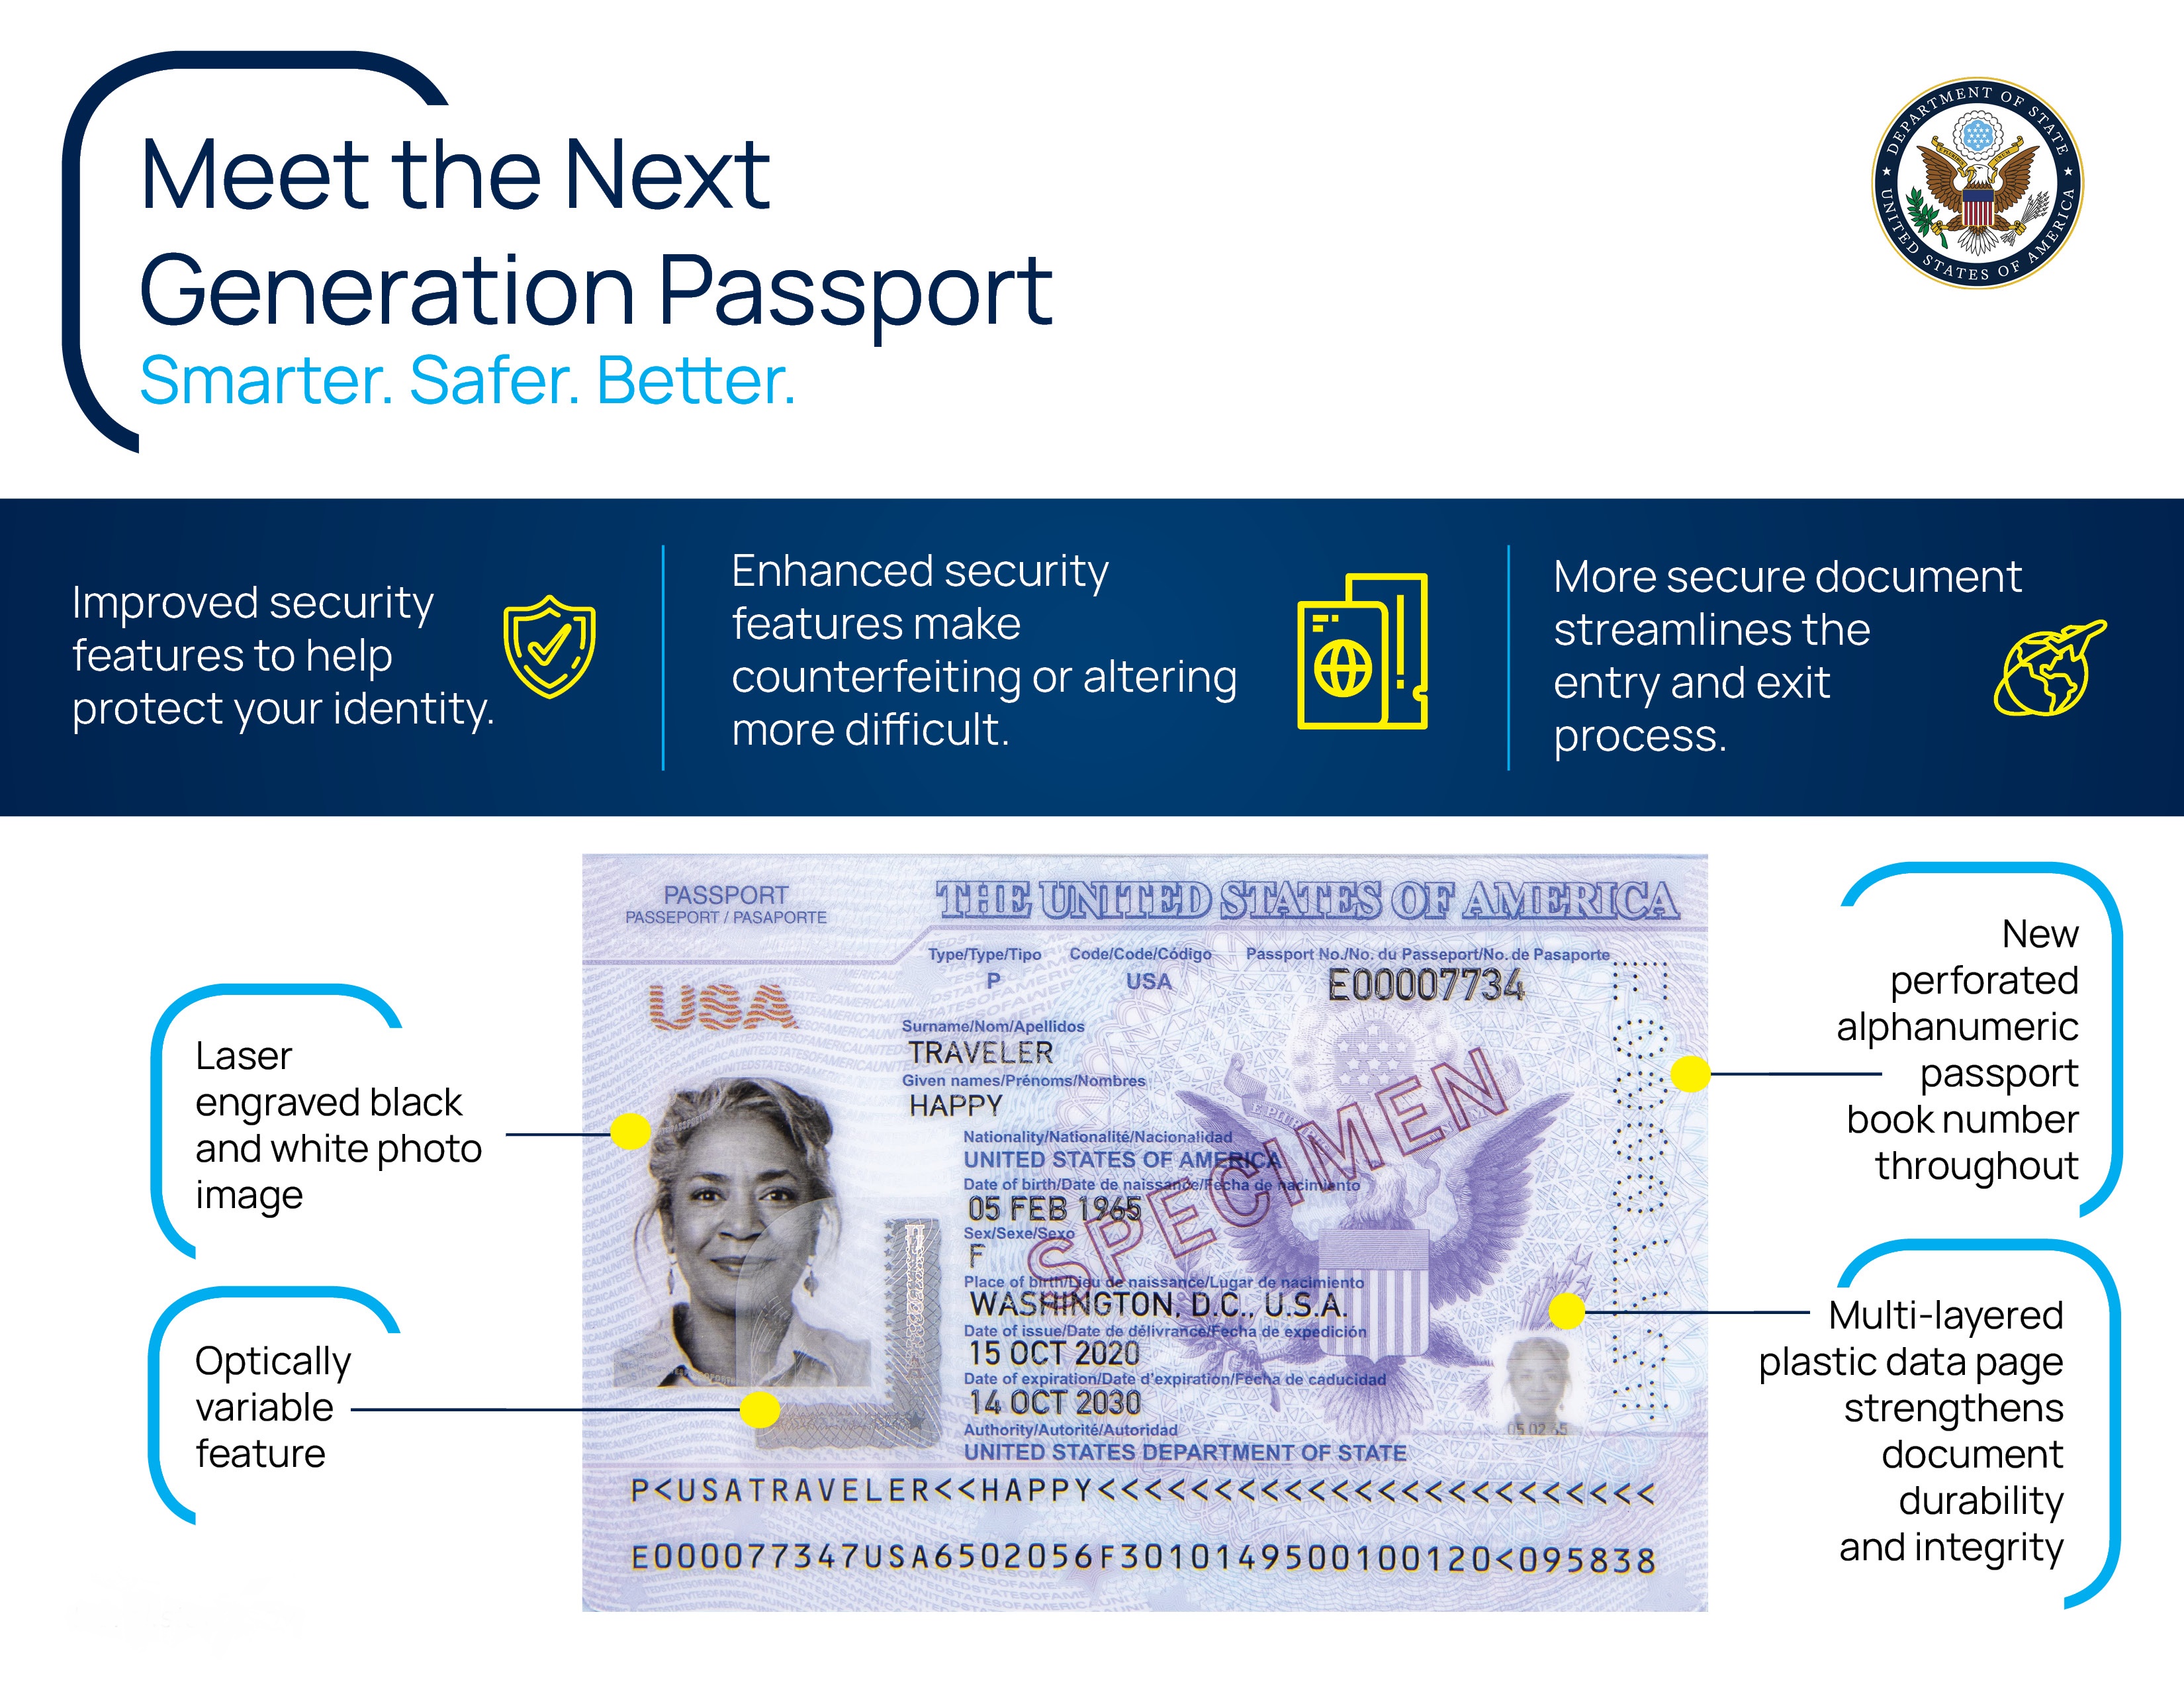 Infographic on the next generation U.S. passport